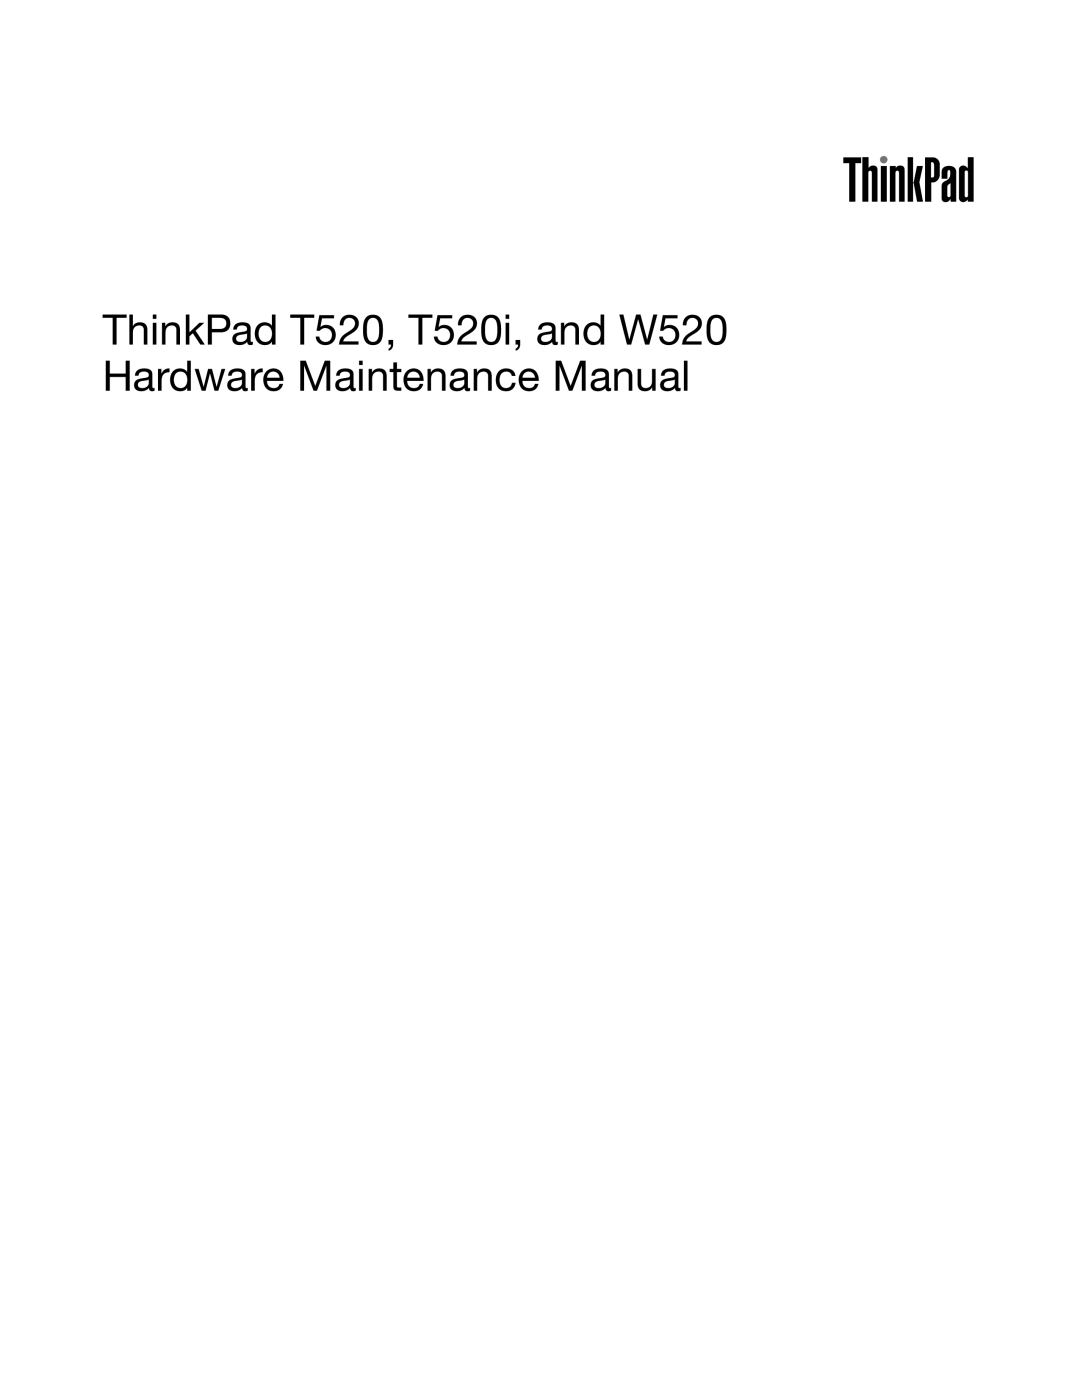 Lenovo 4284WW9PC10B371 manual ThinkPad T520, T520i, and W520 Hardware Maintenance Manual 